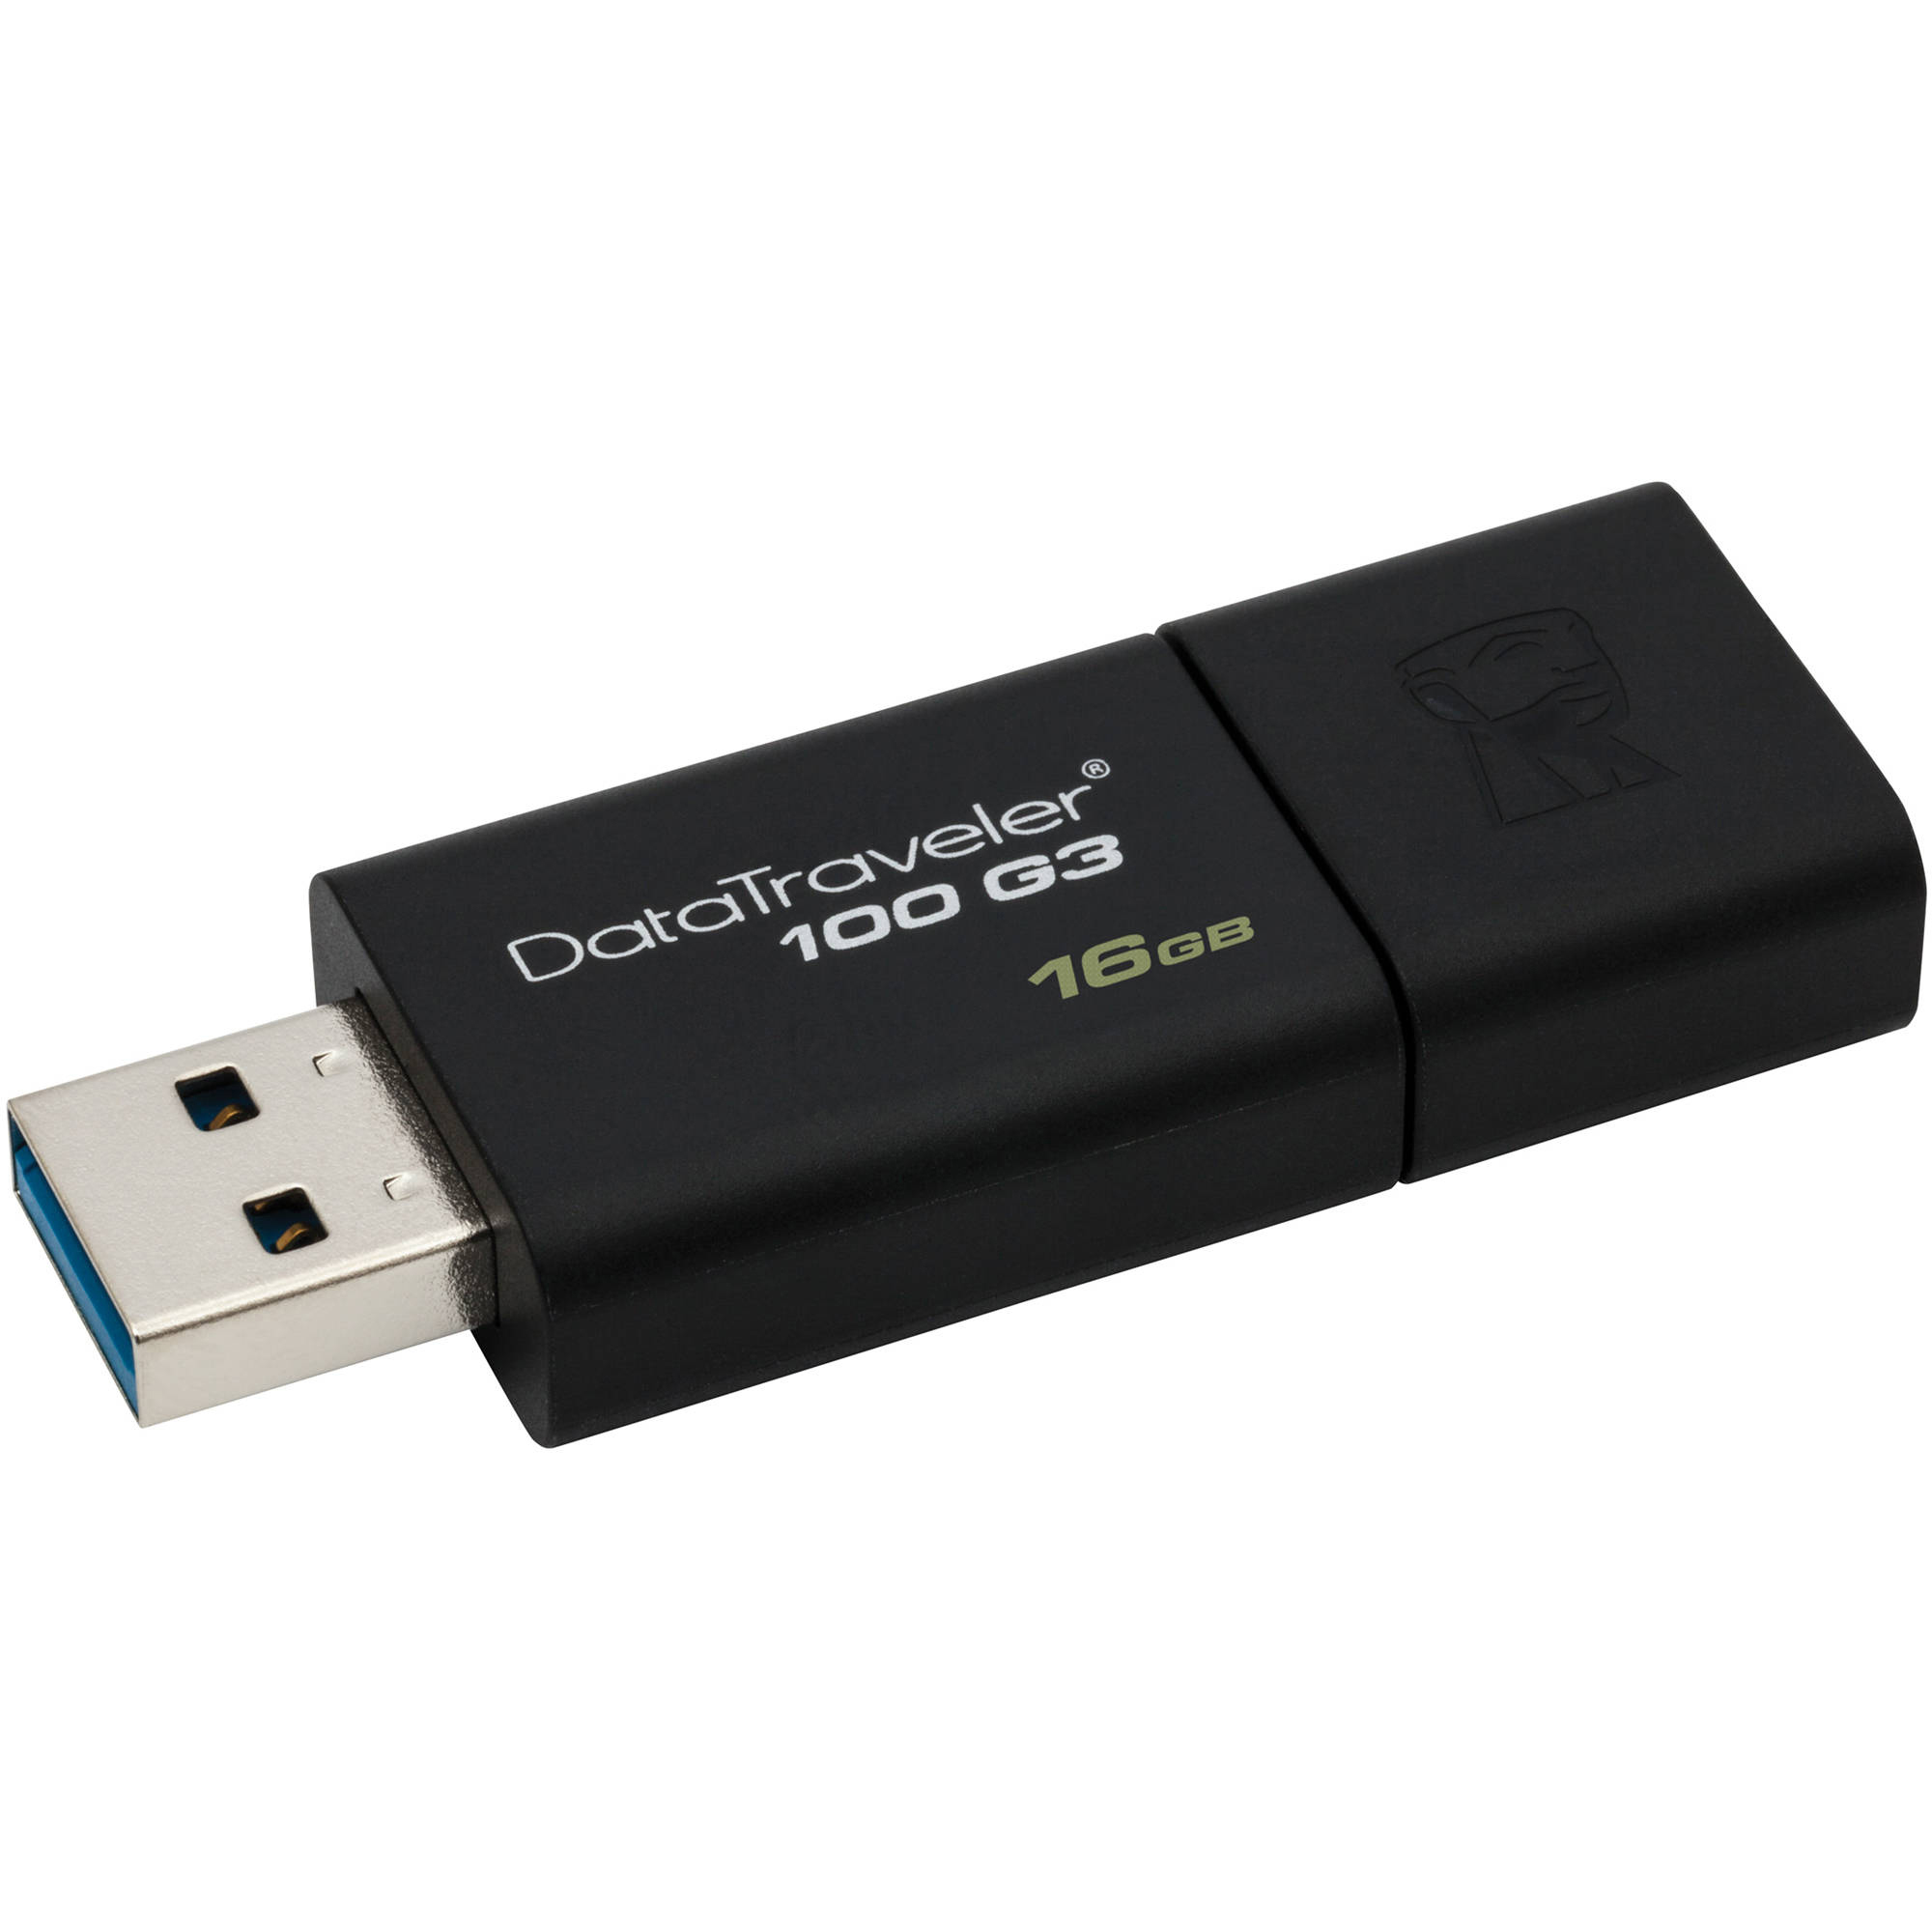 Original Kingston DataTraveler 100 G3 16GB USB 3.0 Flash Drive (DT100G3/16GB)